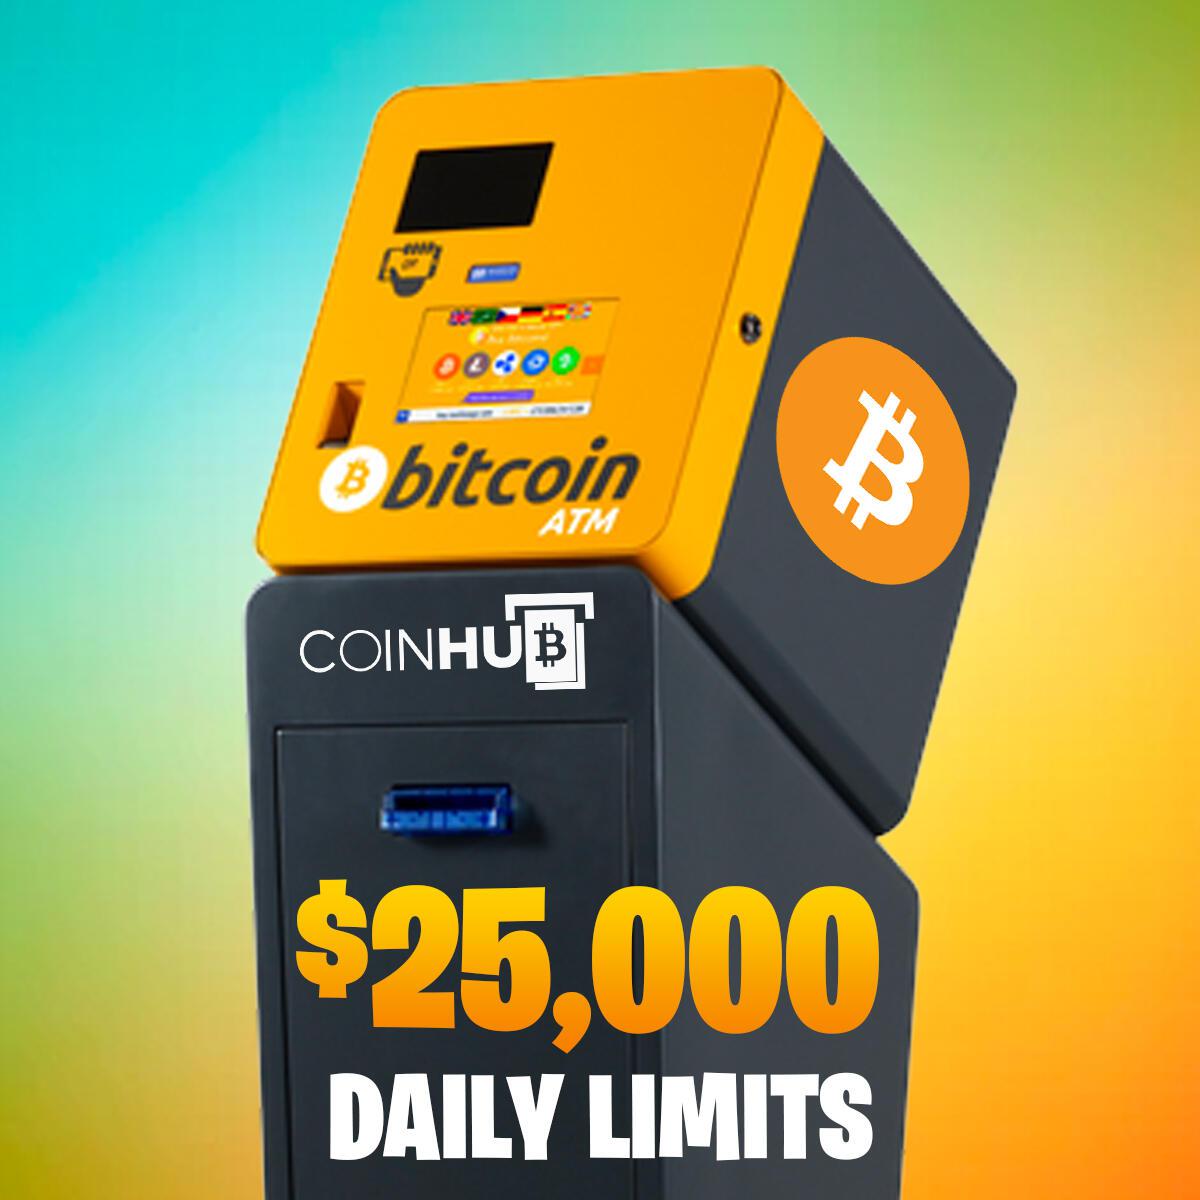 Bitcoin ATM Sacramento - Coinhub